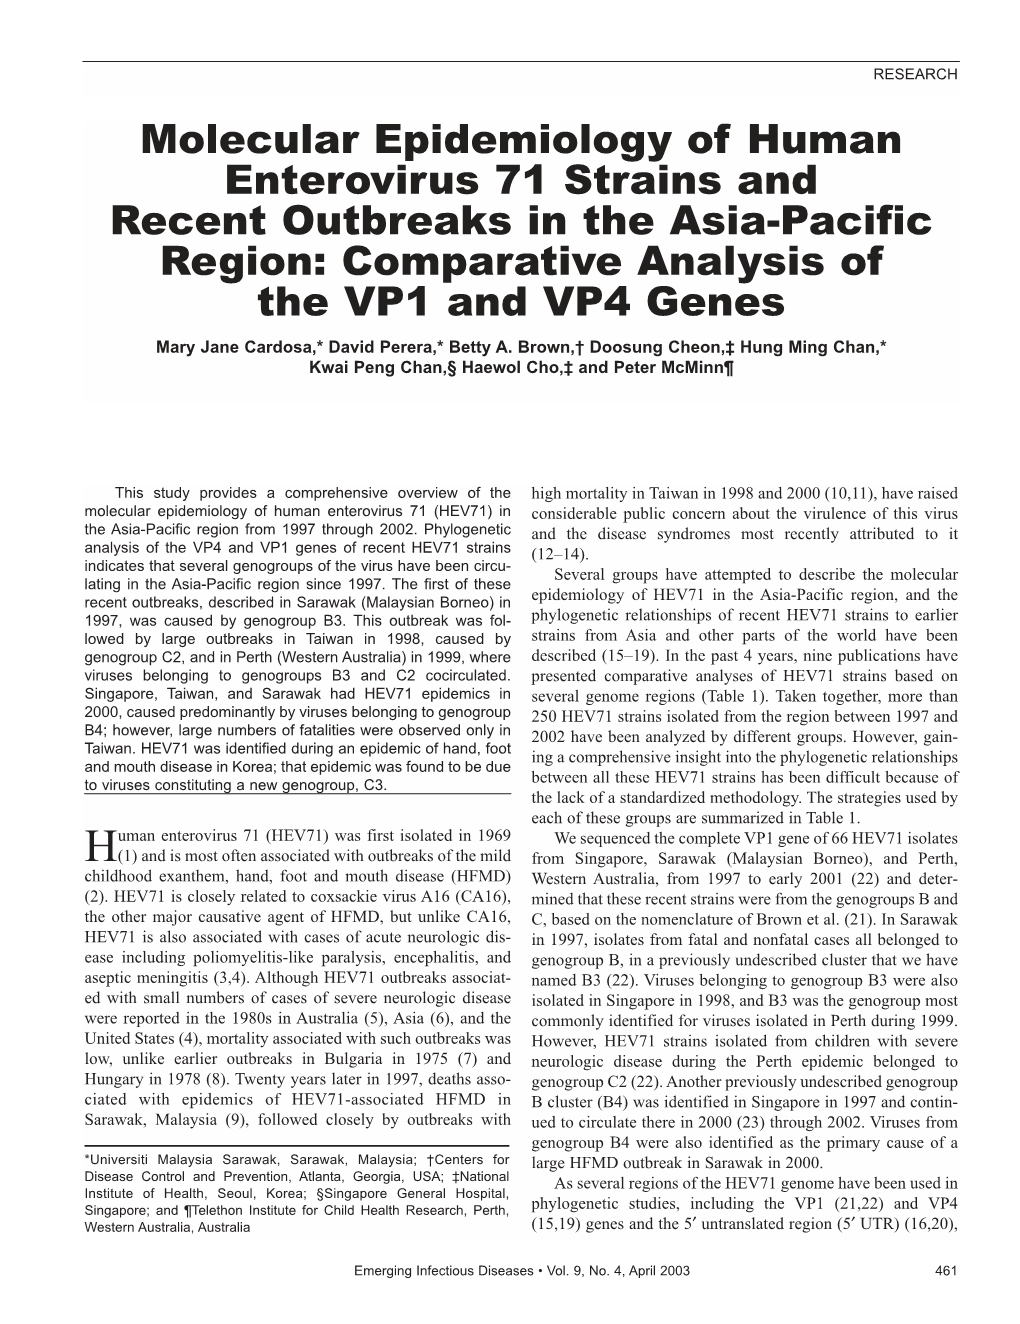 Molecular Epidemiology of Human Enterovirus 71 Strains and Recent